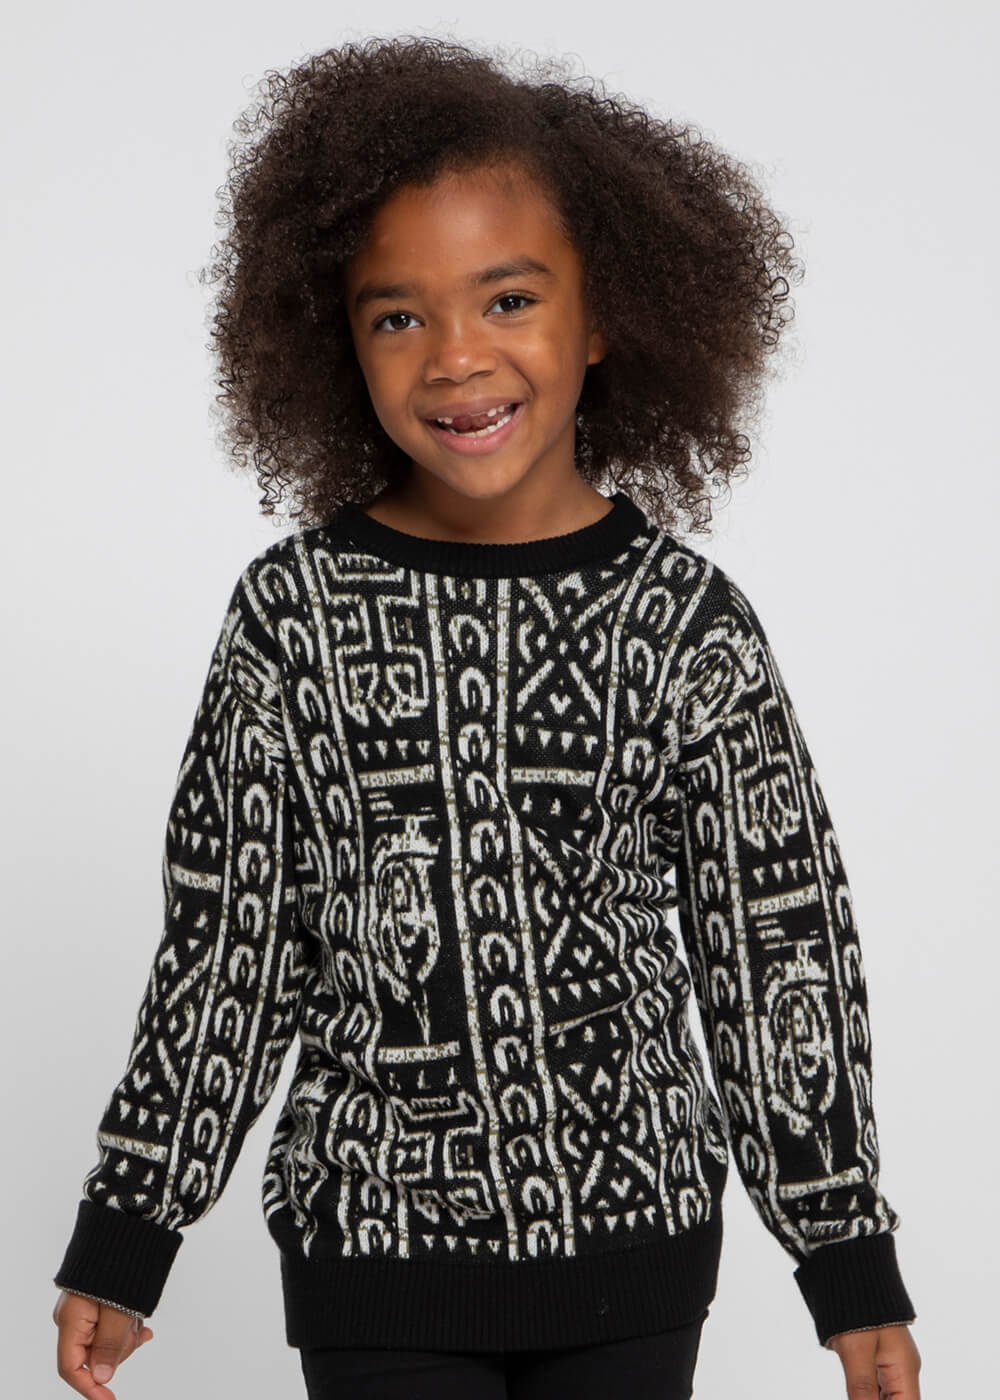 Oma Kids' African Print Sweater (Black White Tribal)